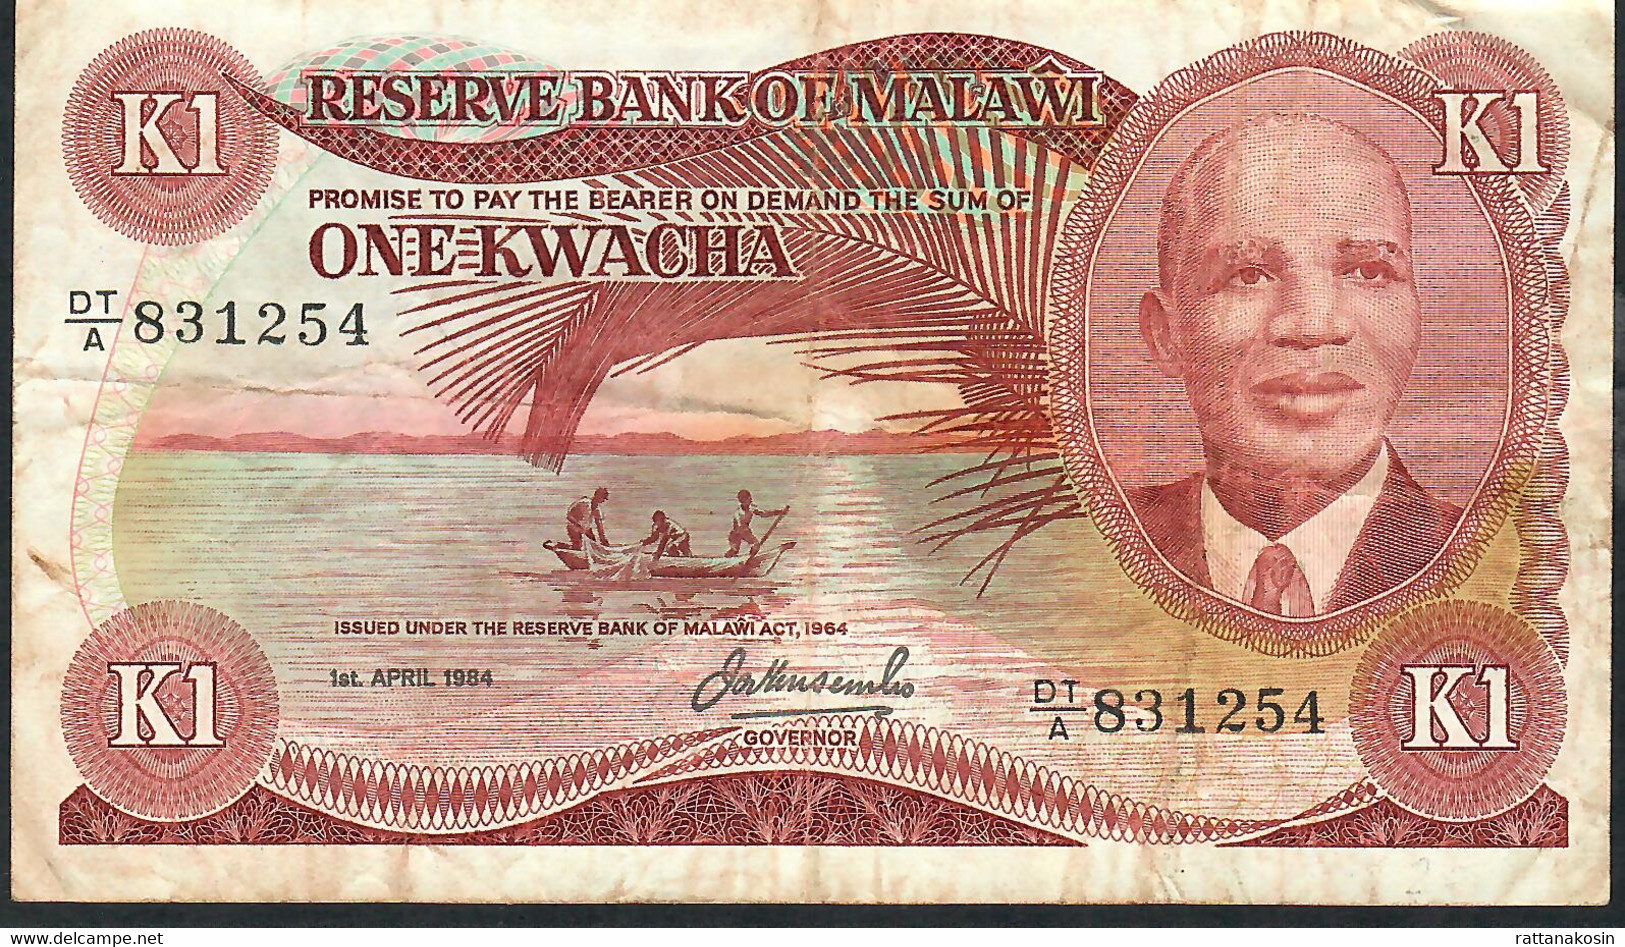 MALAWI P14g 1 KWACHA 1.4.1984 #DT/A F-aVF NO P.h. - Malawi